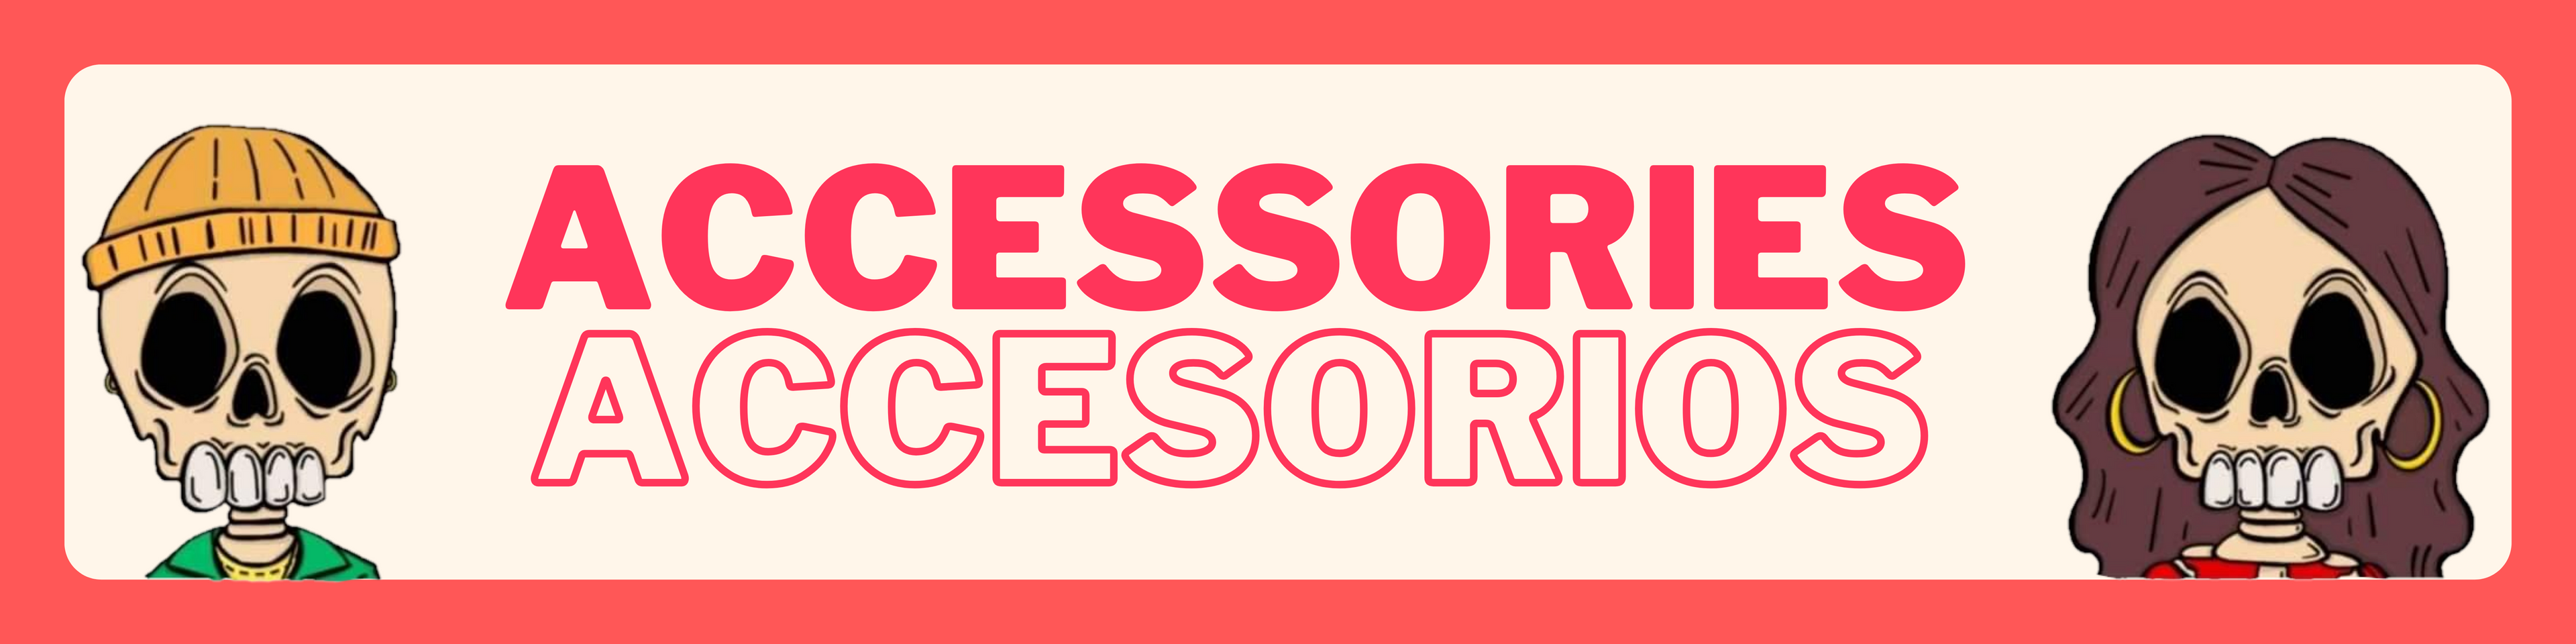 Accessories / Accesorios